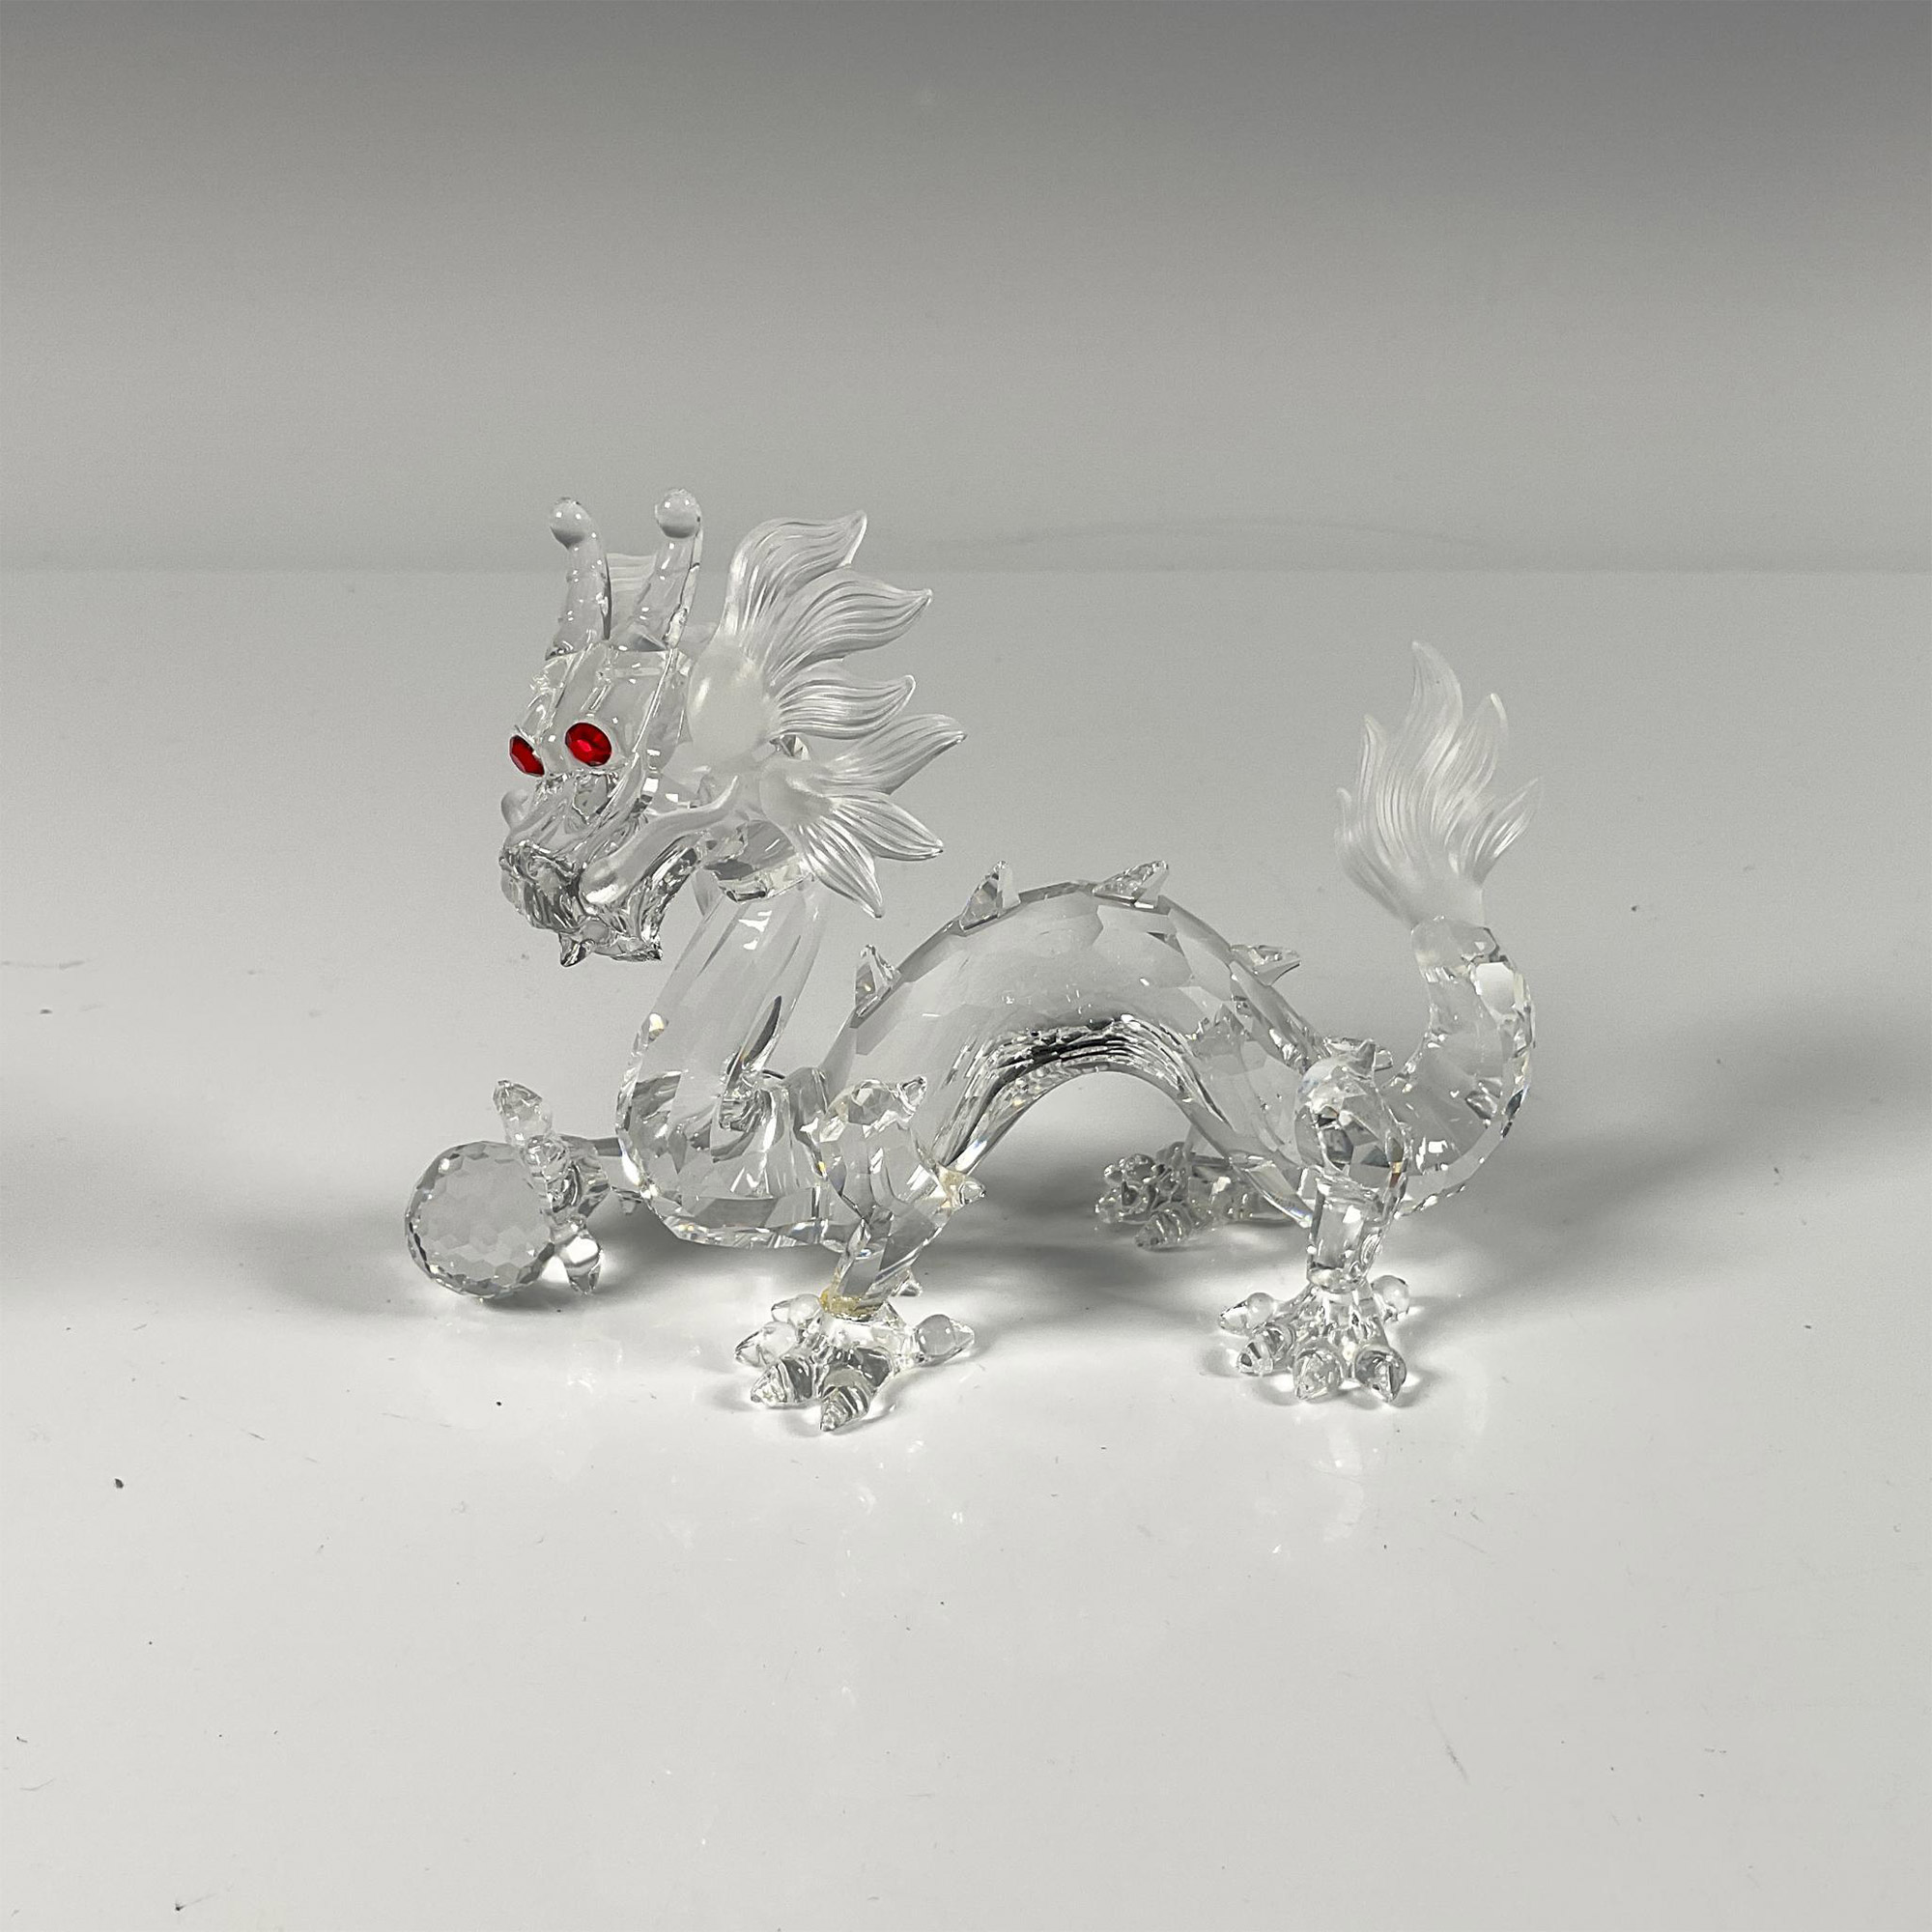 Swarovski Crystal Figurine, The Dragon